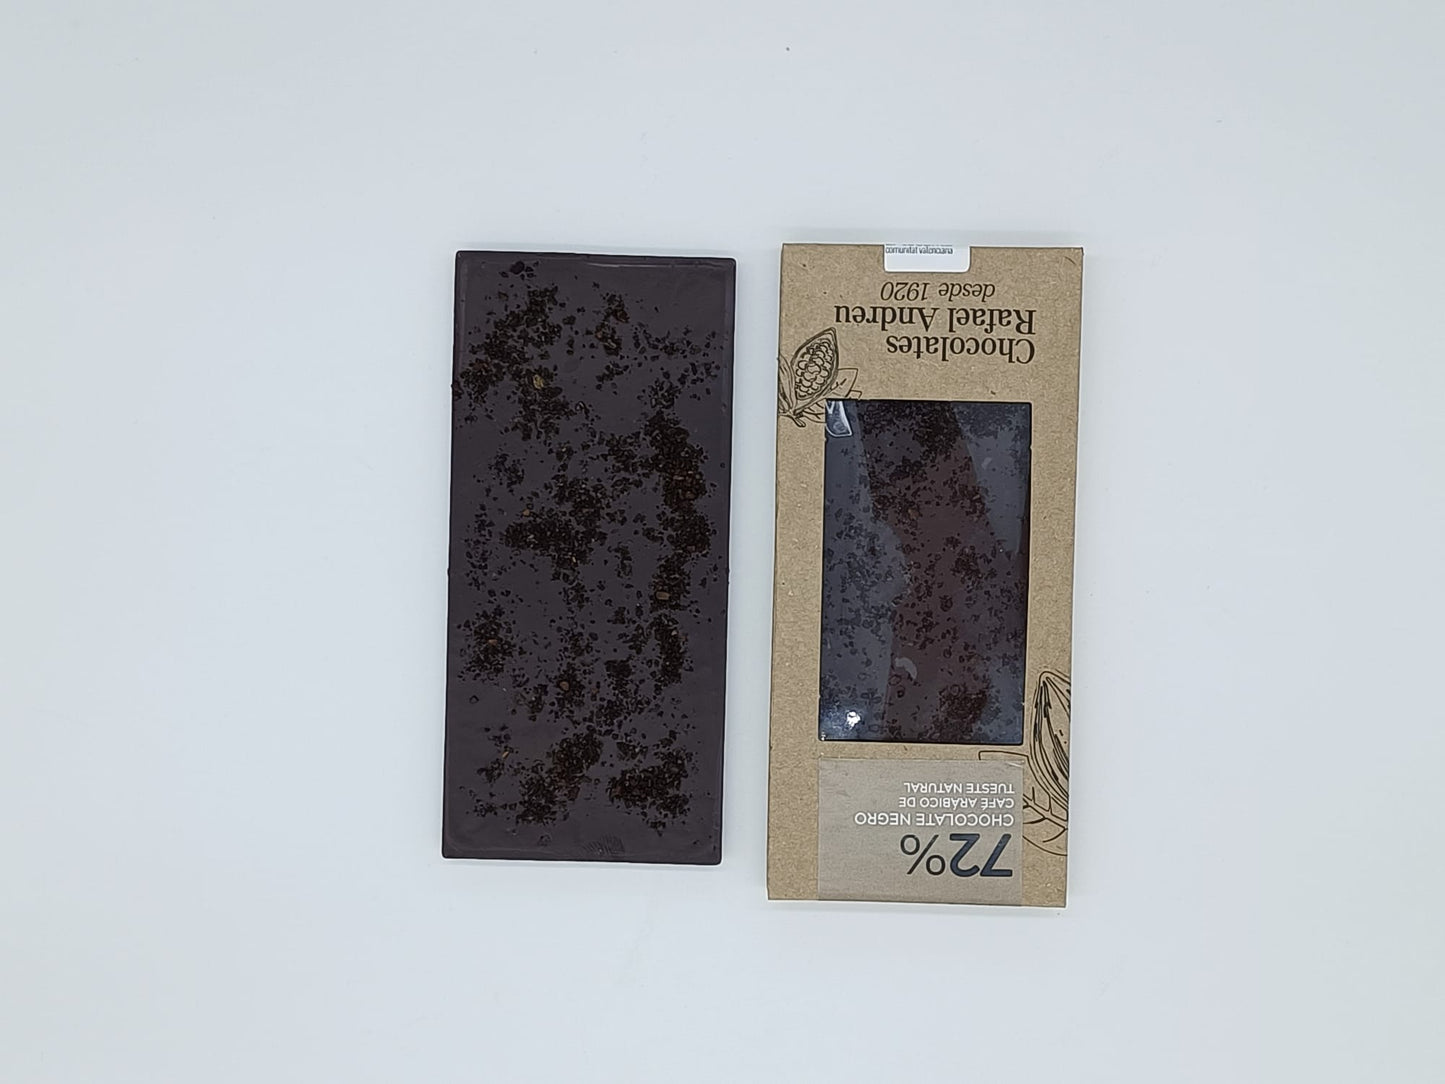 Tableta de chocolate negro café arábico de tueste natural.